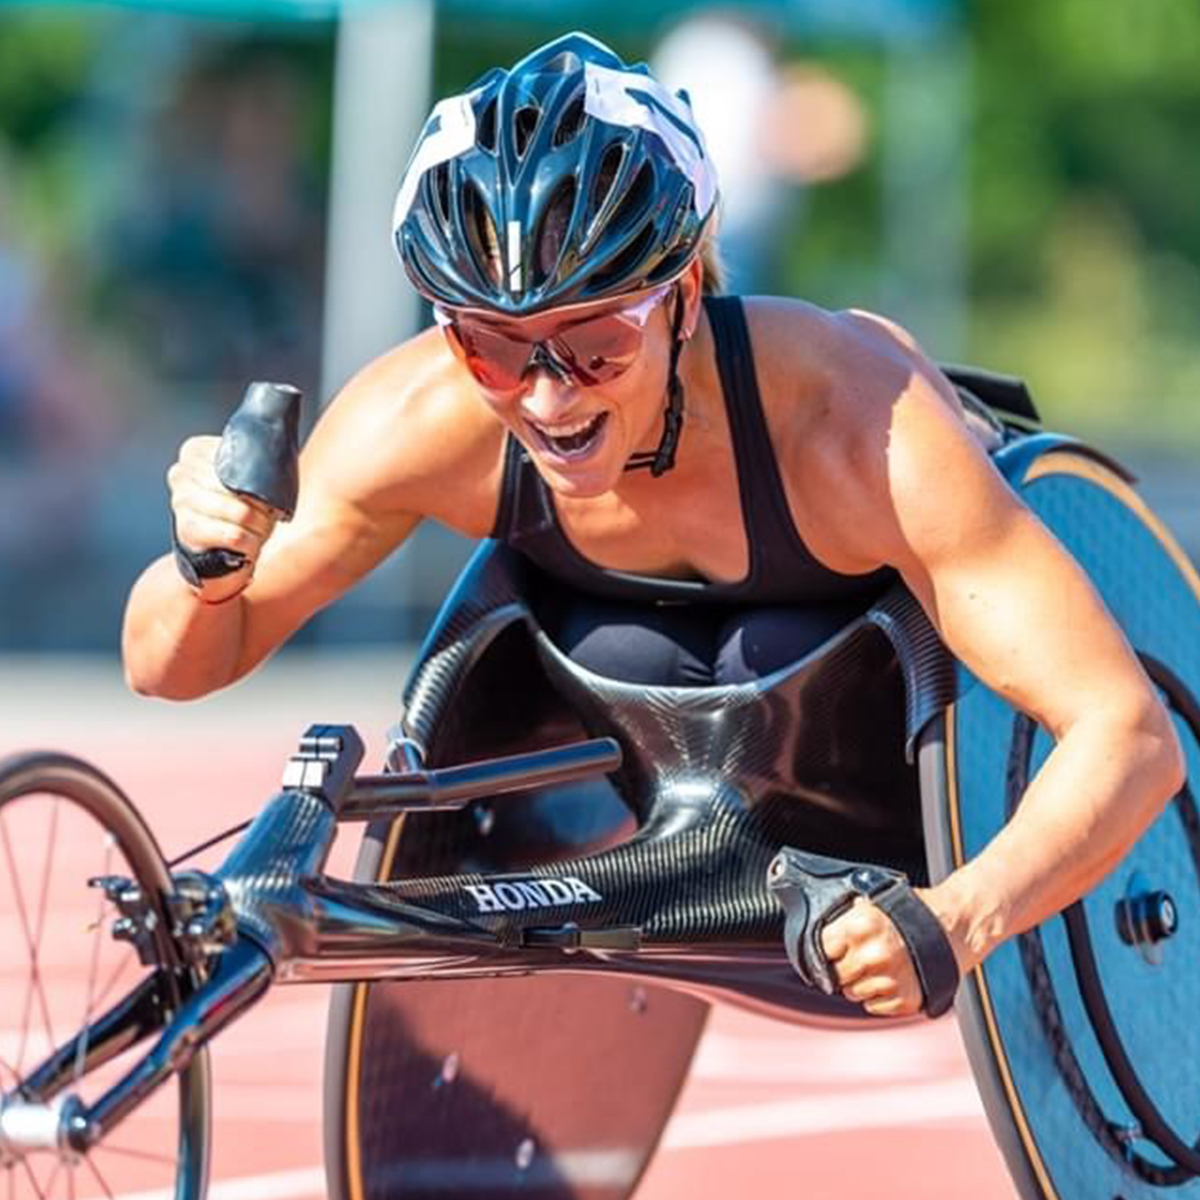 Manuela Schaer wheelchair racing athlete